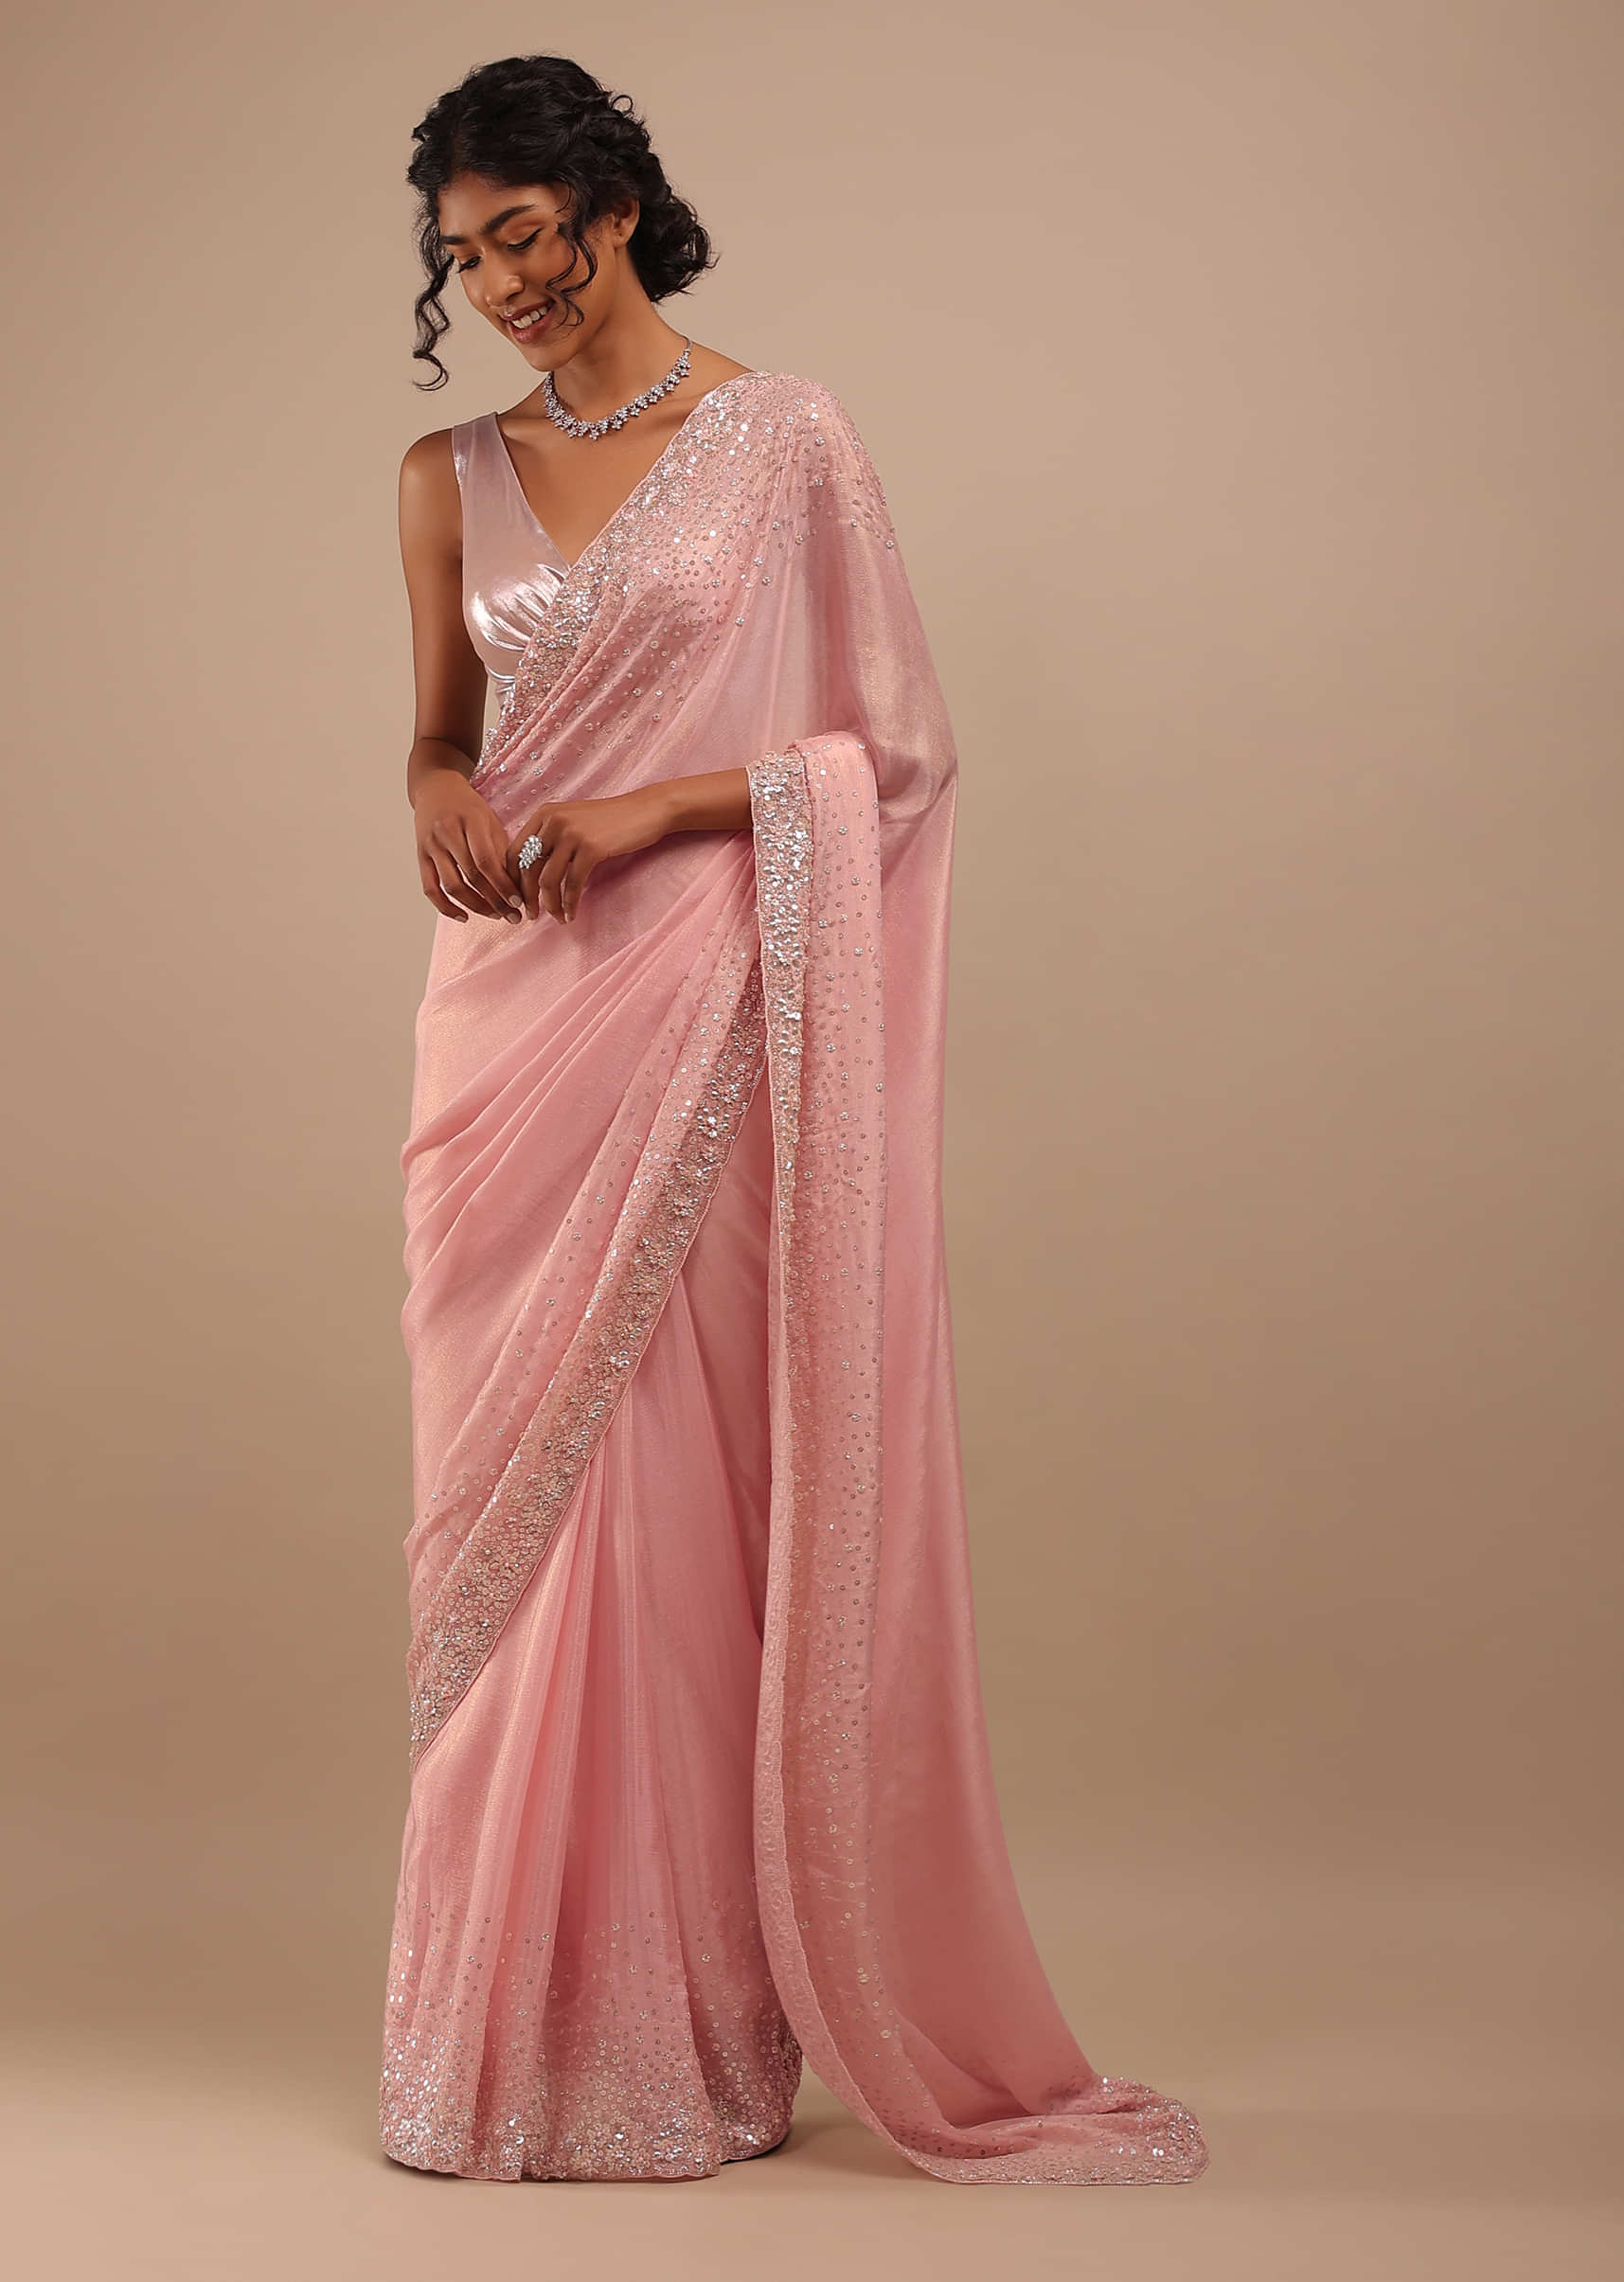 Women Elegence Pink Woven Kanjivaram Silk Saree - with Saree Cover Price in  India - Buy Women Elegence Pink Woven Kanjivaram Silk Saree - with Saree  Cover online at womenelegence.com